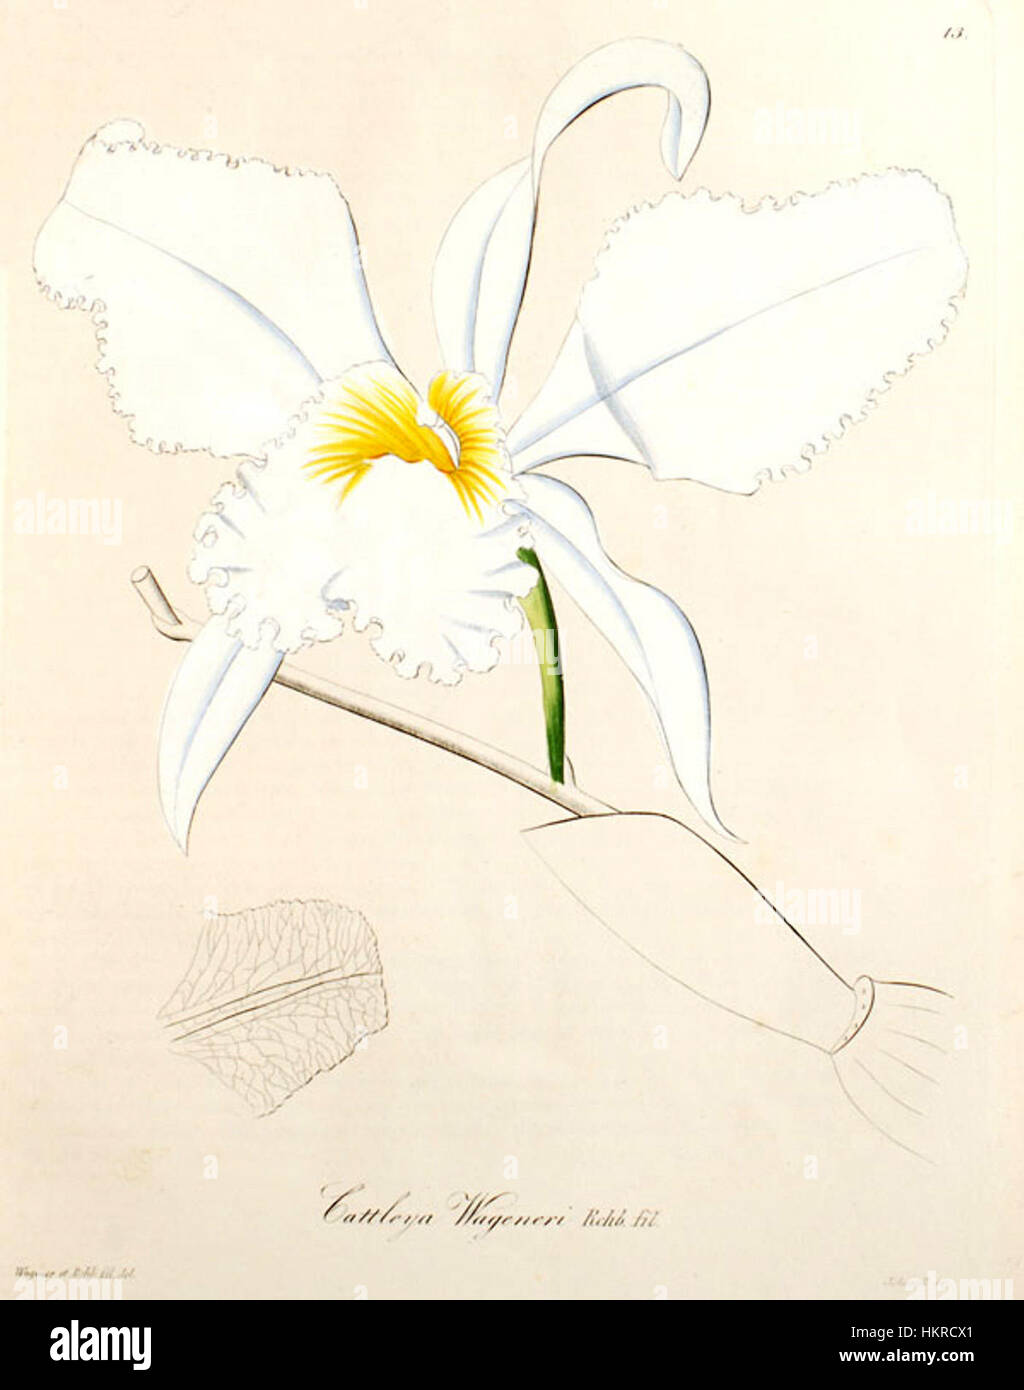 Cattleya mossiae (as Cattleya wageneri) - Xenia 1 pl. 13 (1858) Stock Photo